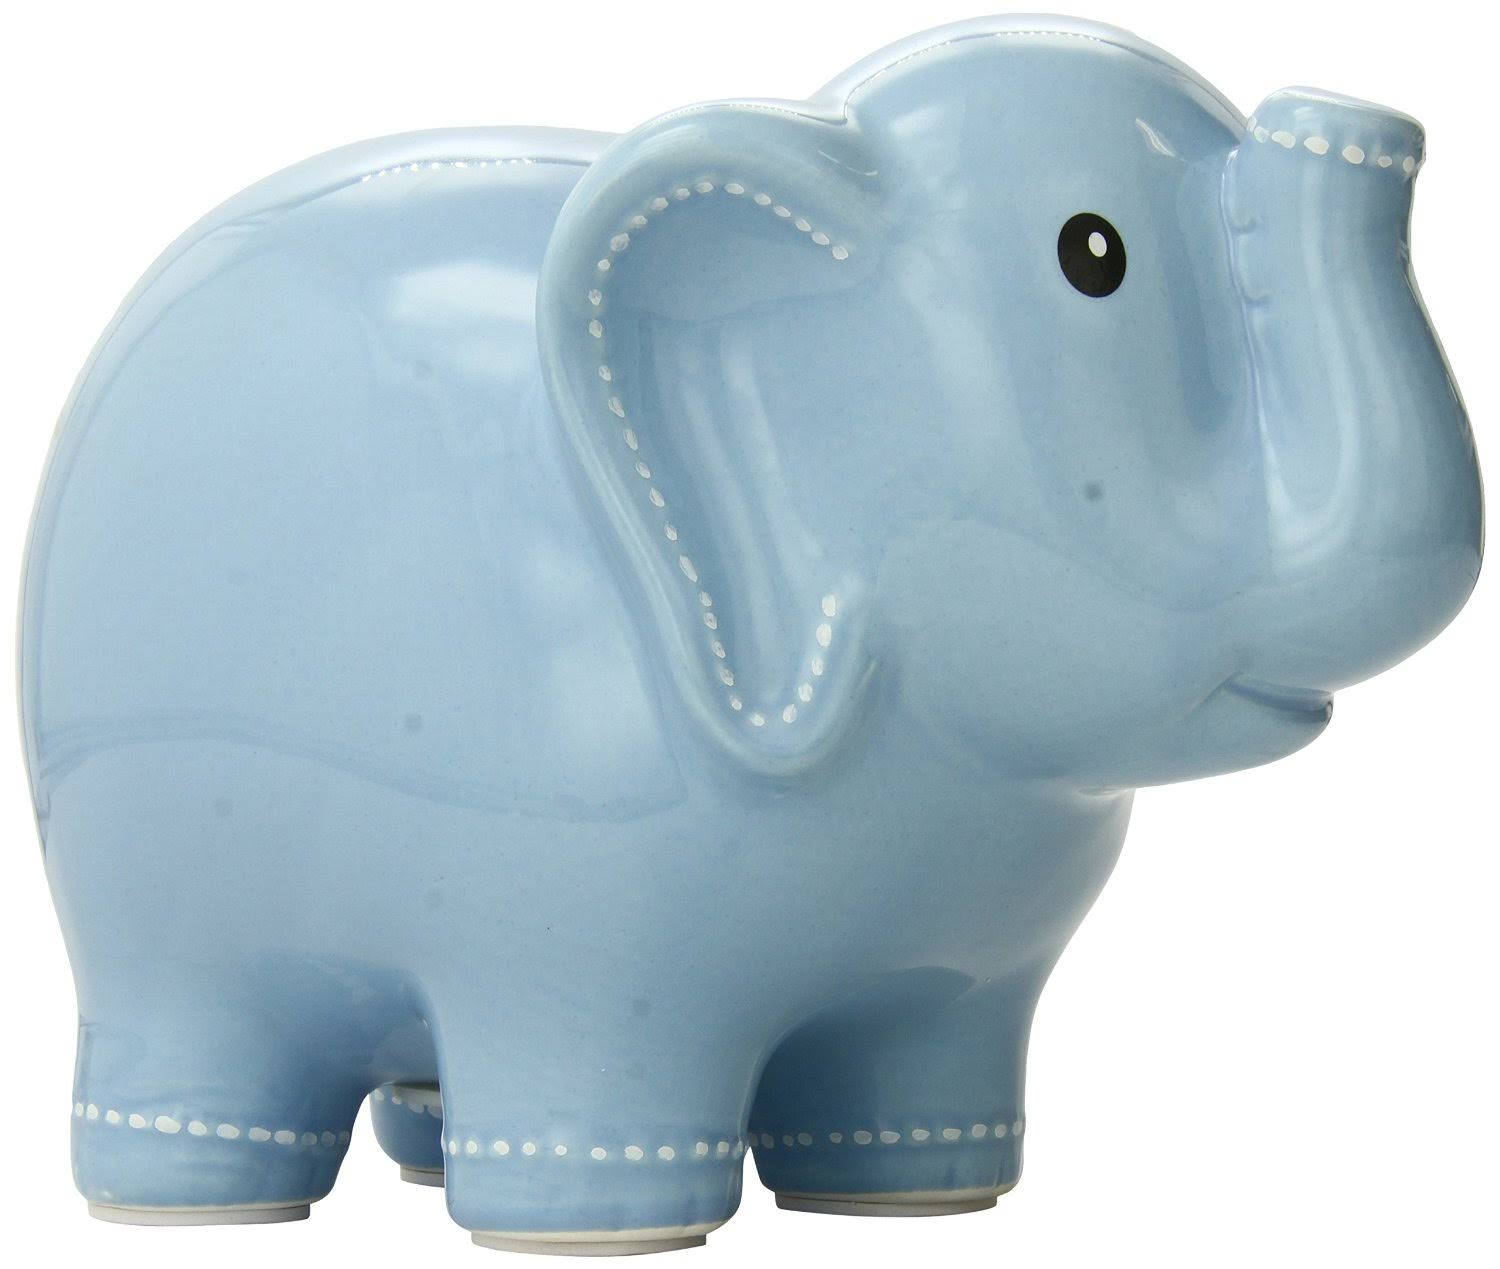 Child to Cherish Ceramic Stitched Elephant Piggy Bank - Blue